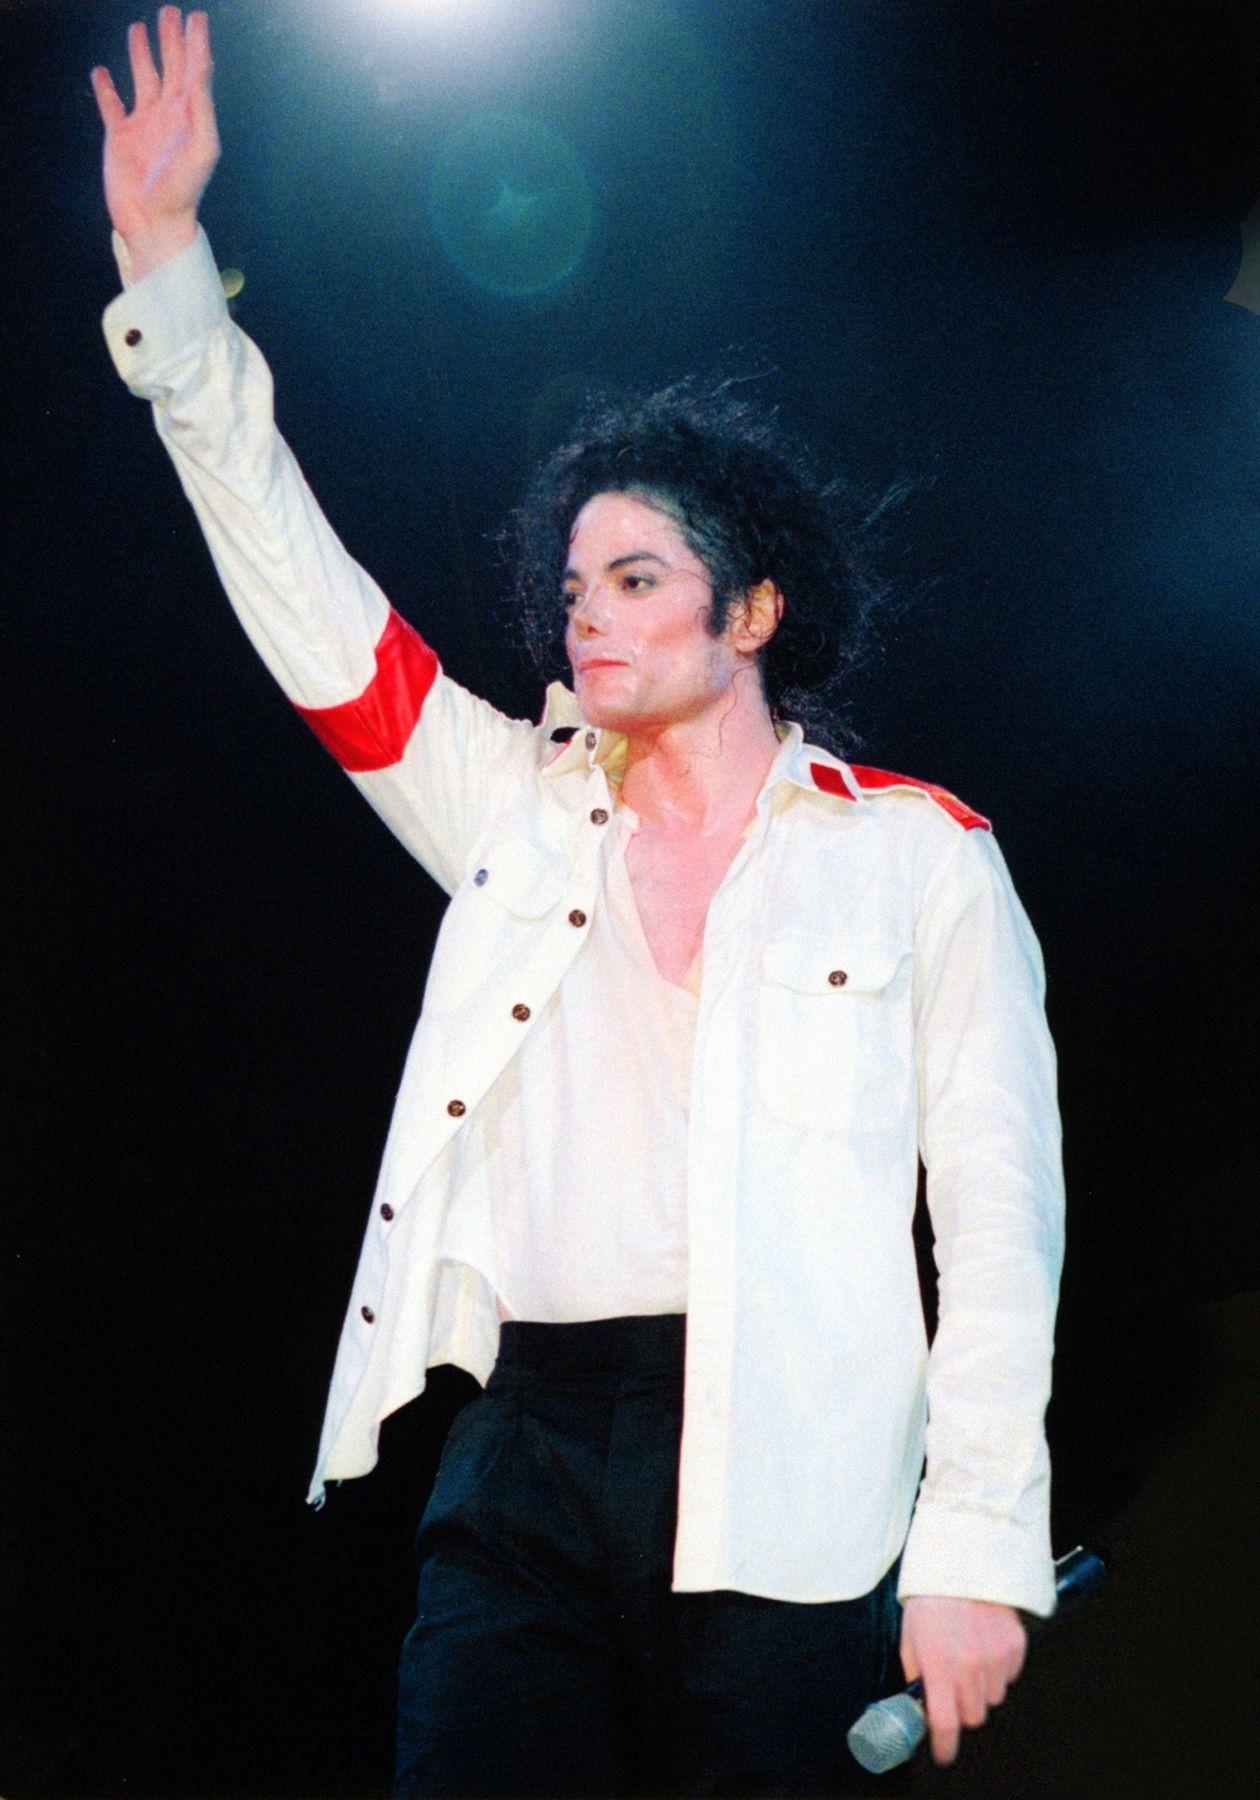 Dangerous Tour In The Mirror. MJ: Michael Jackson. Michael